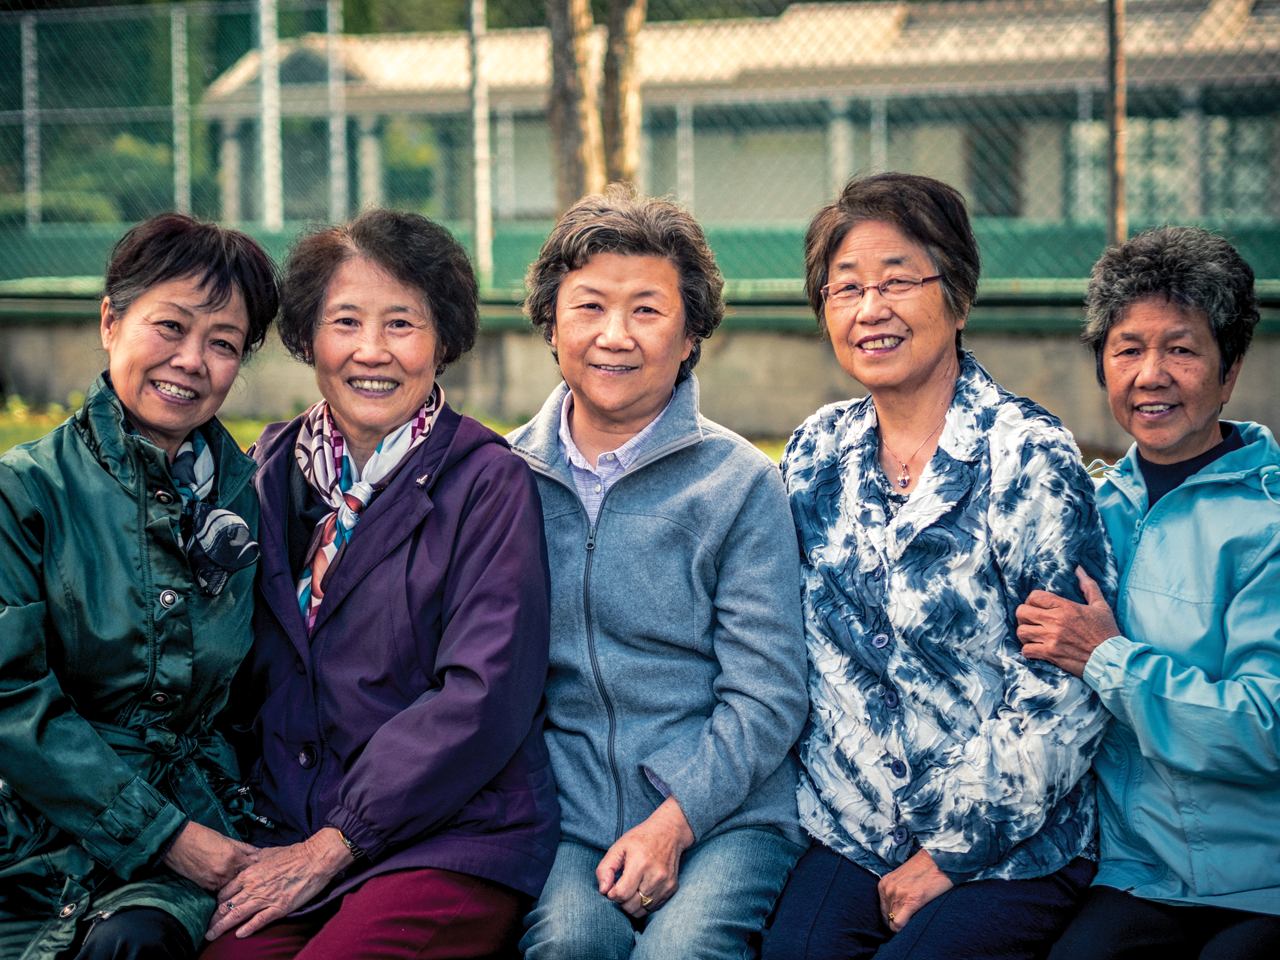 Older Women's Dialogue Project